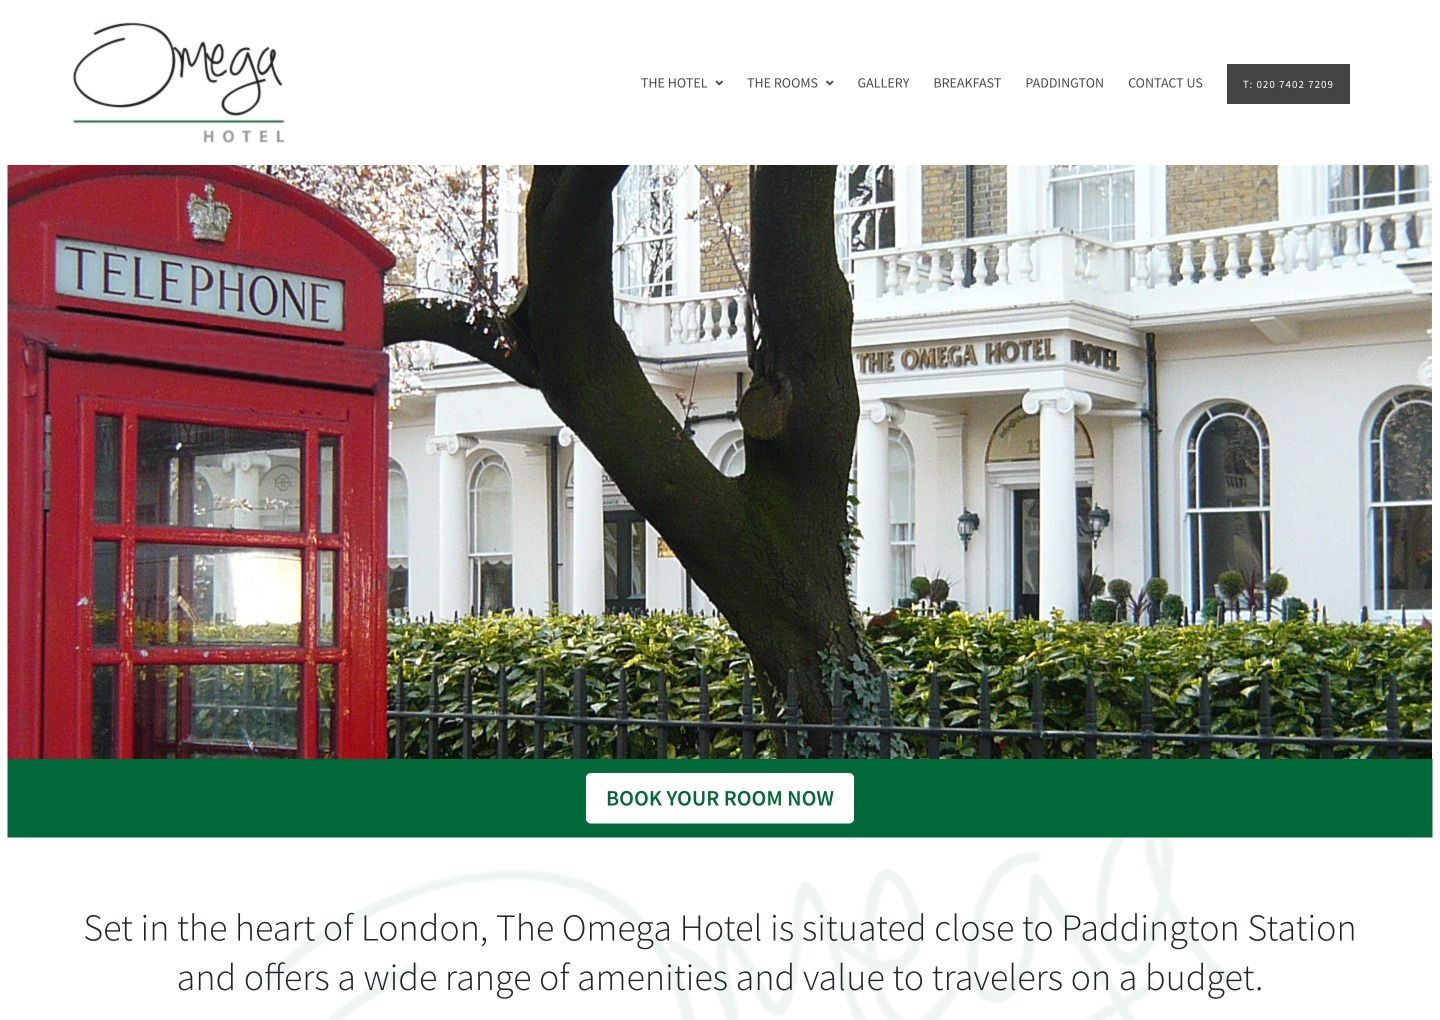 Budget Hotel Paddington London - The Omega Hotel (1) copy